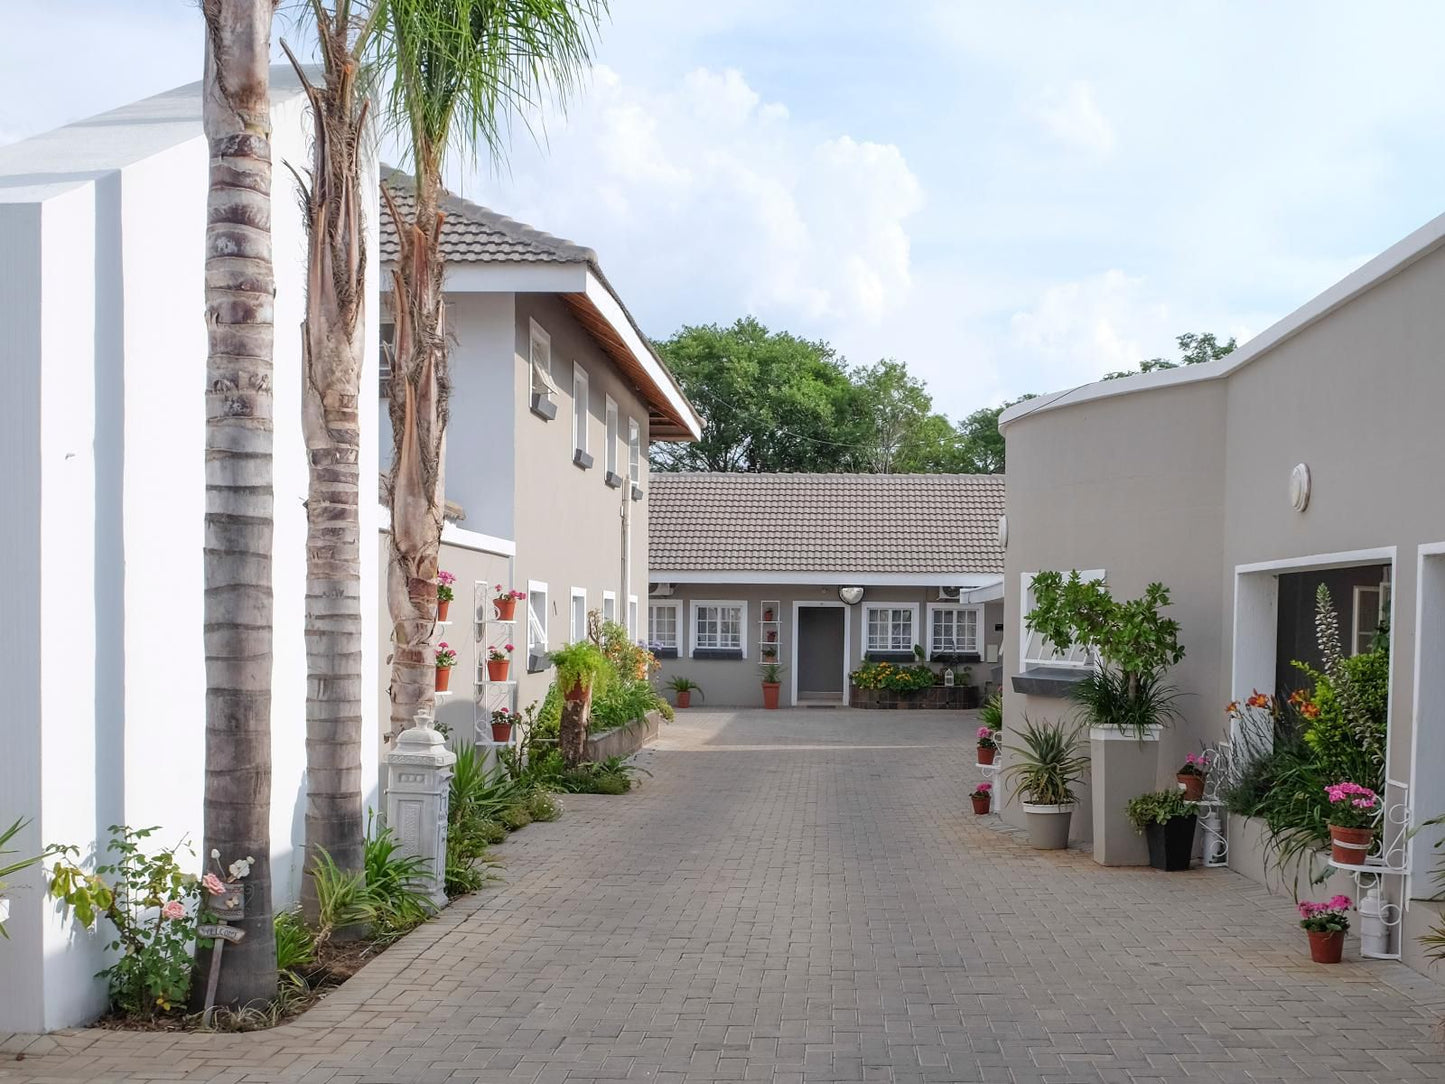 Firwood Lodge Hazelwood Pretoria Tshwane Gauteng South Africa House, Building, Architecture, Palm Tree, Plant, Nature, Wood